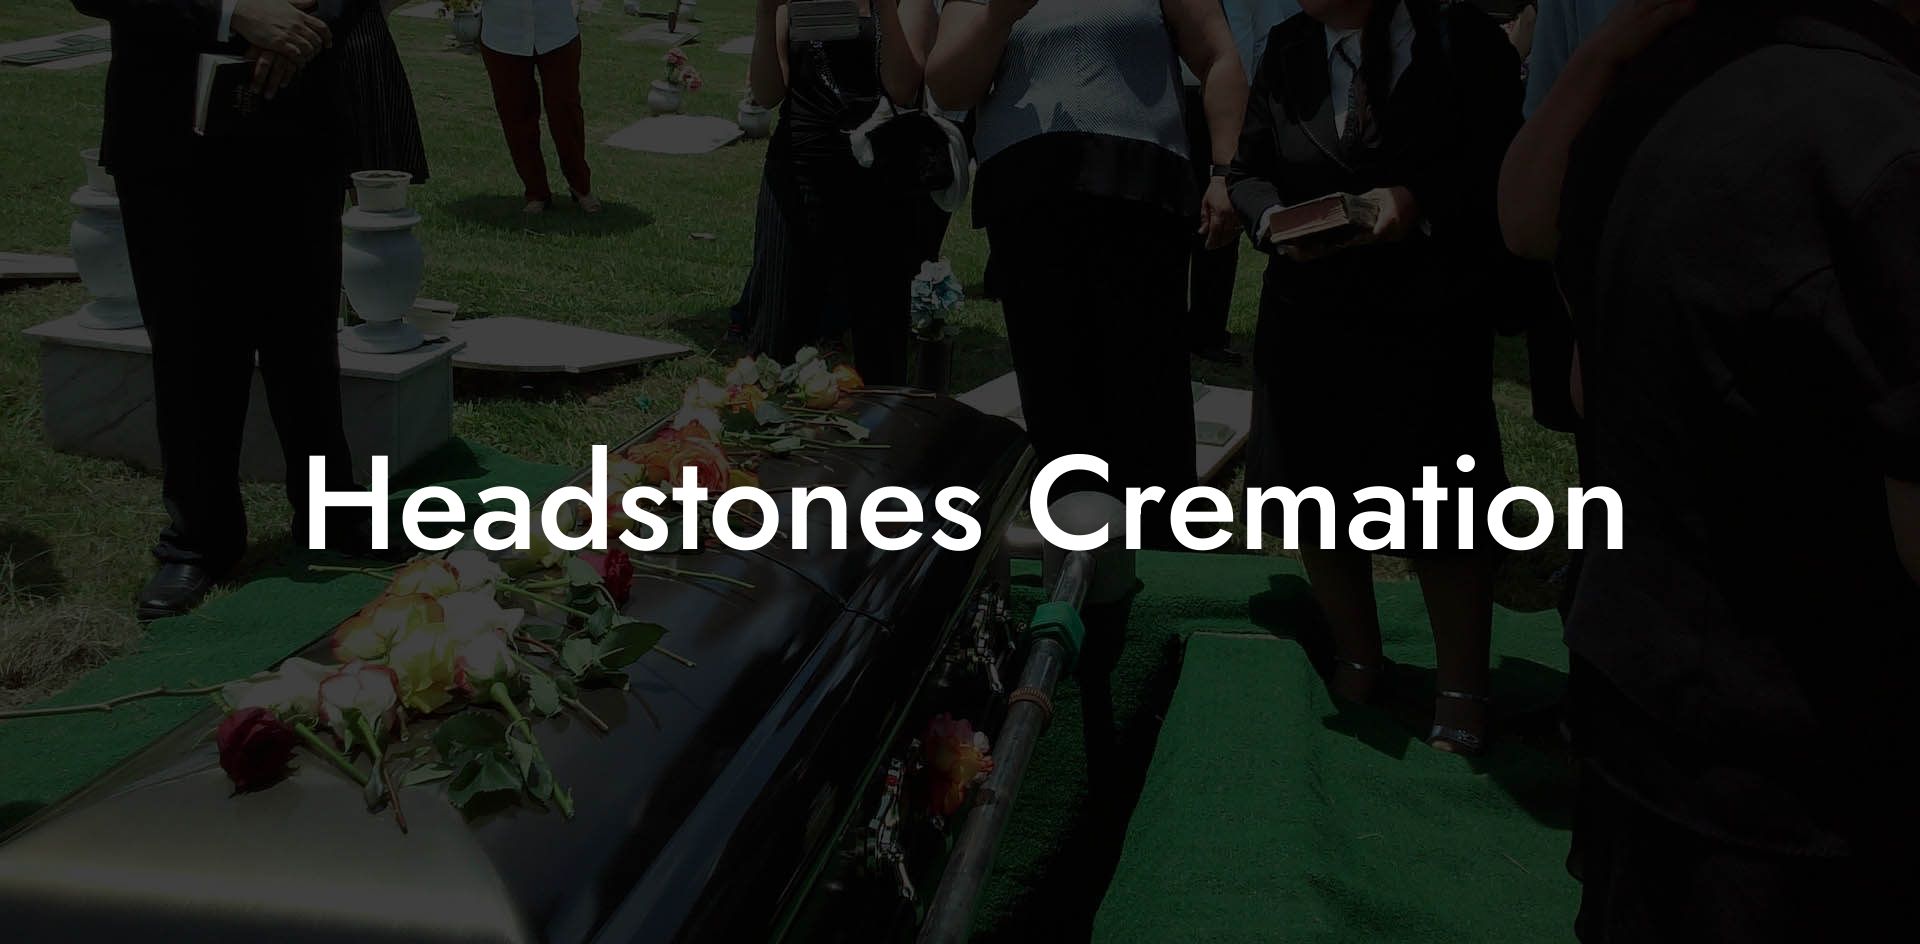 Headstones Cremation